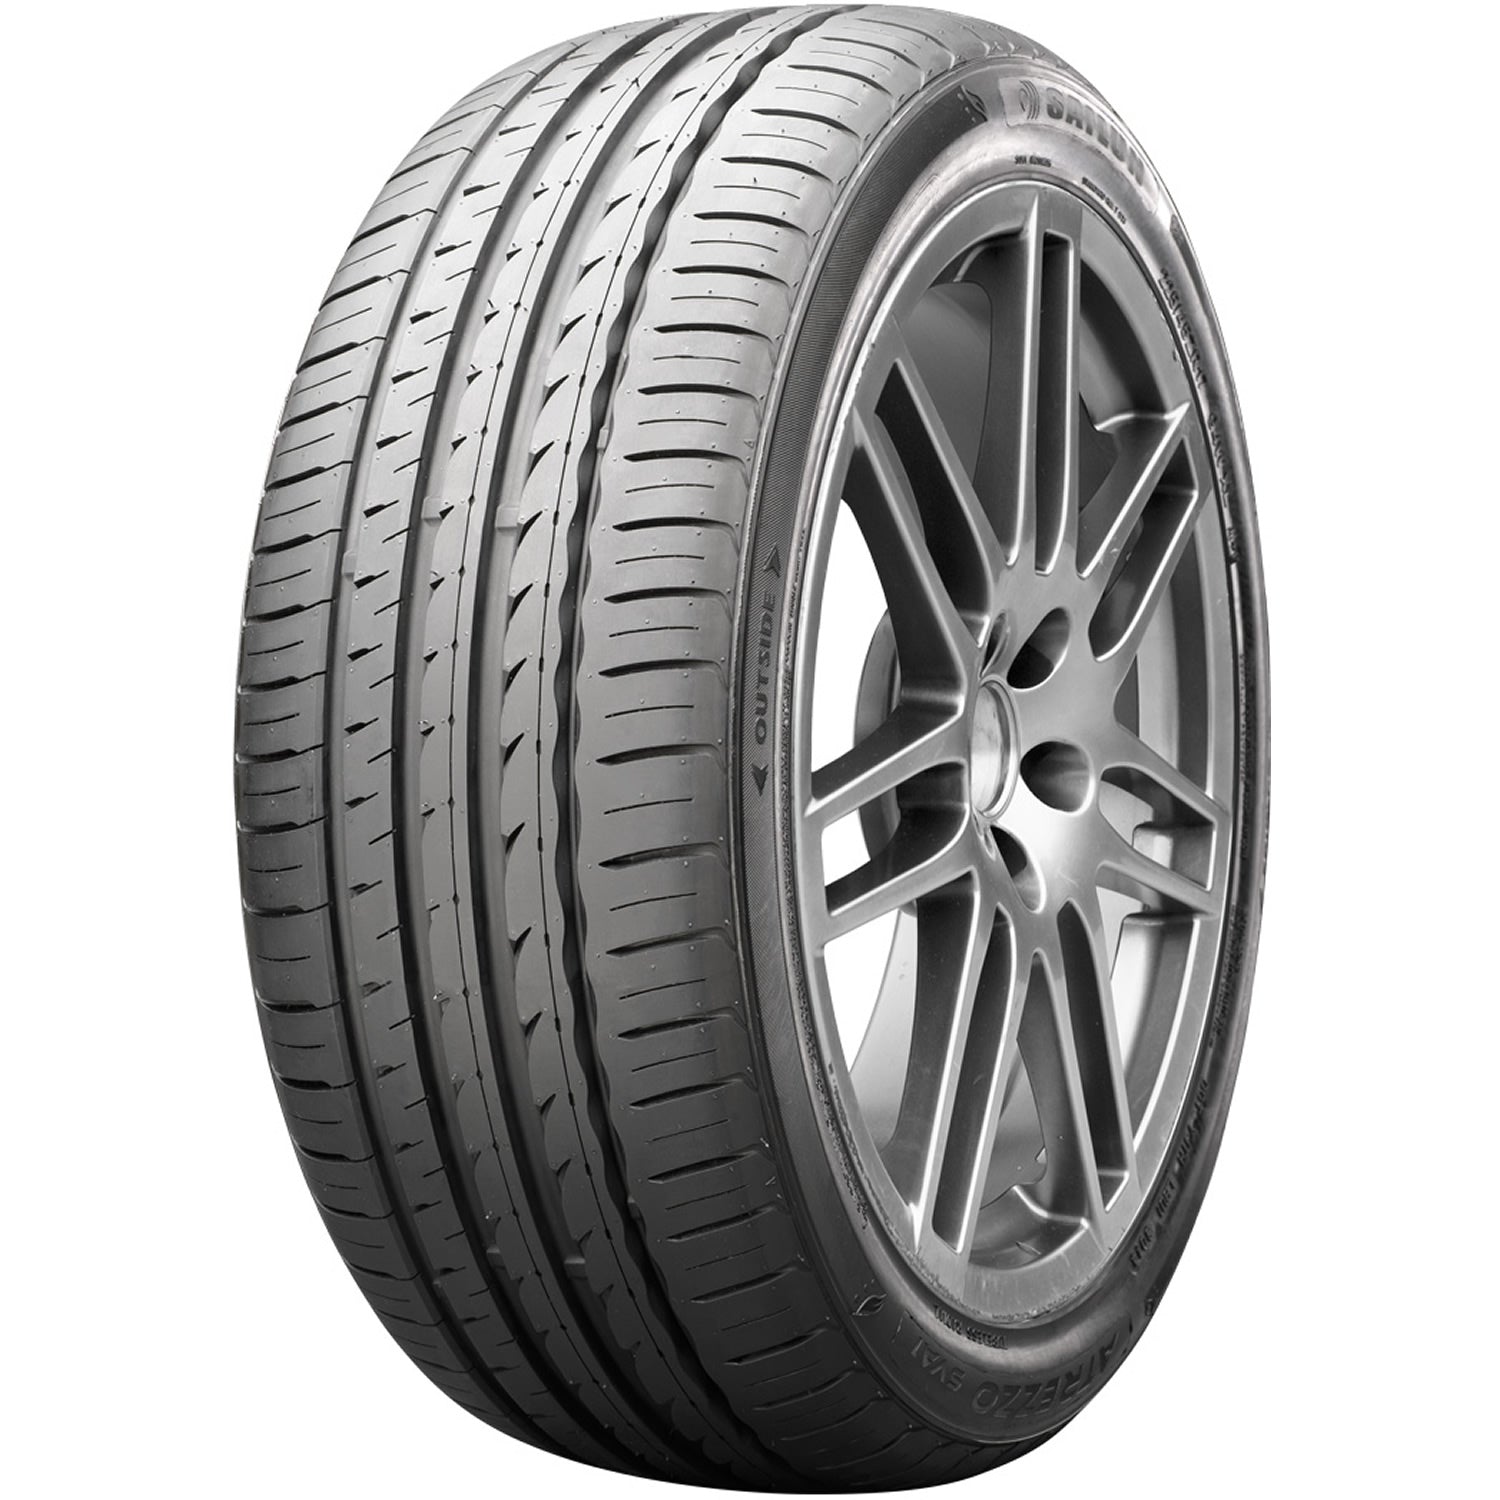 SAILUN ATREZZO SVA1 205/40R17 (23.5X8.4R 17) Tires